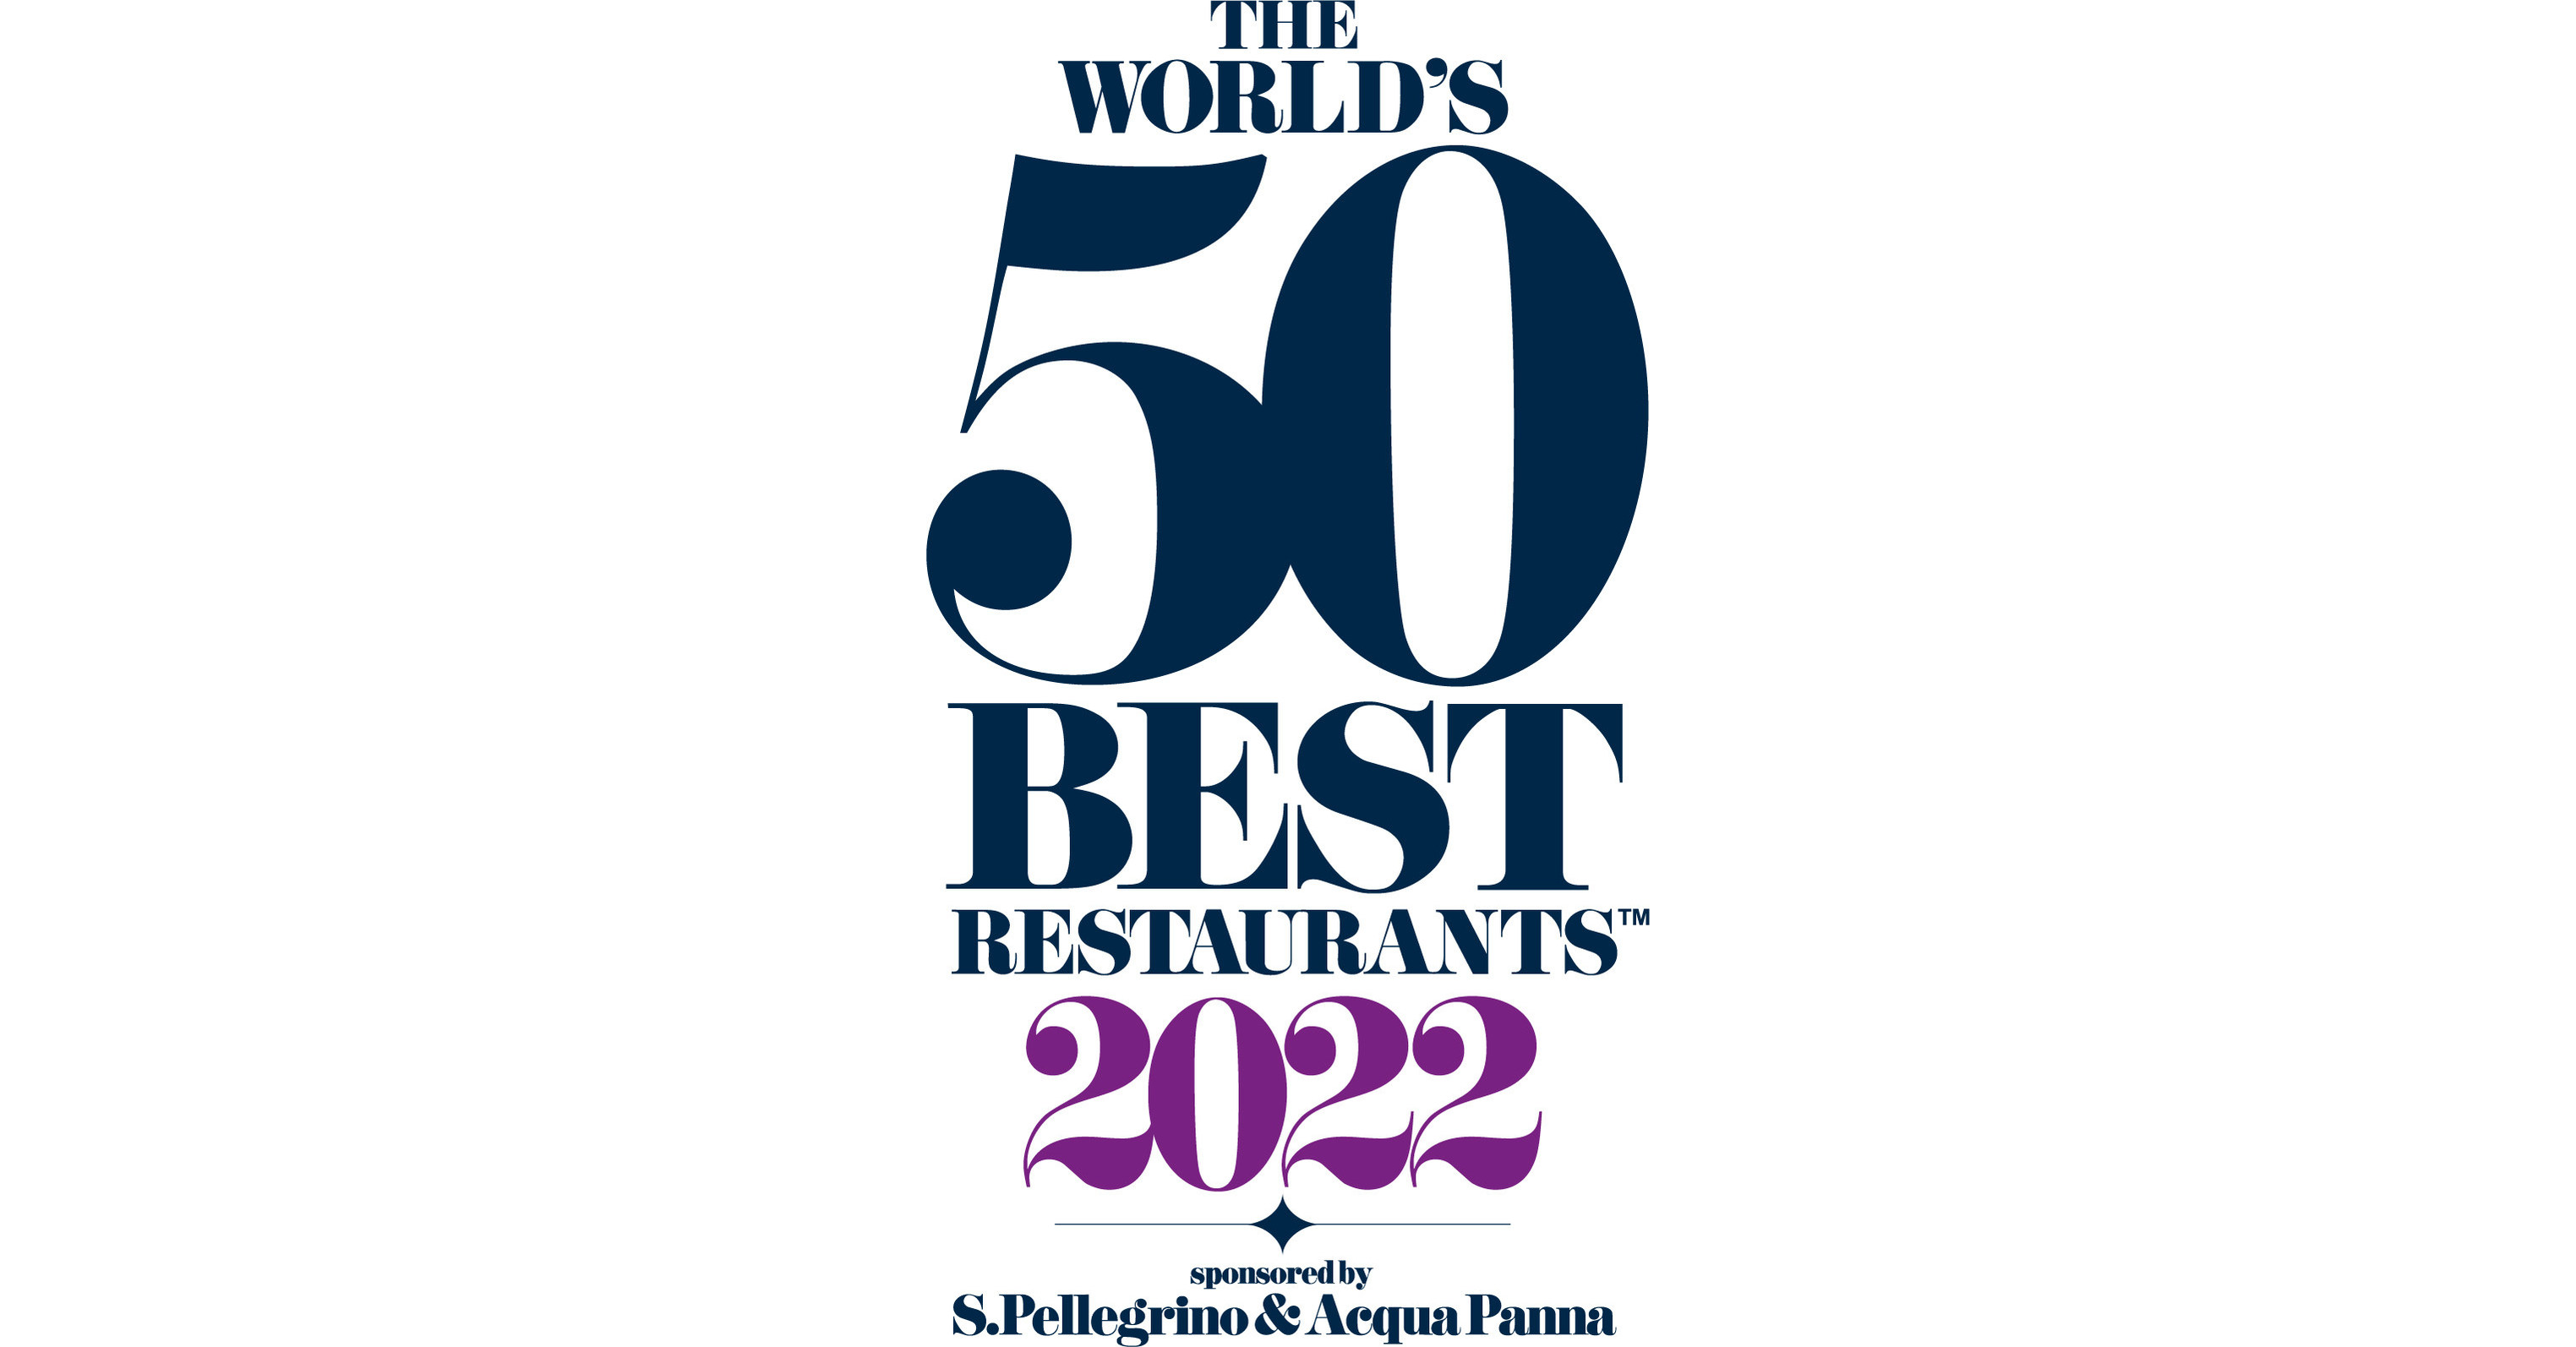 THE 50 BEST RESTAURANTS ANNOUNCES THE 51-100 LIST FOR 2022